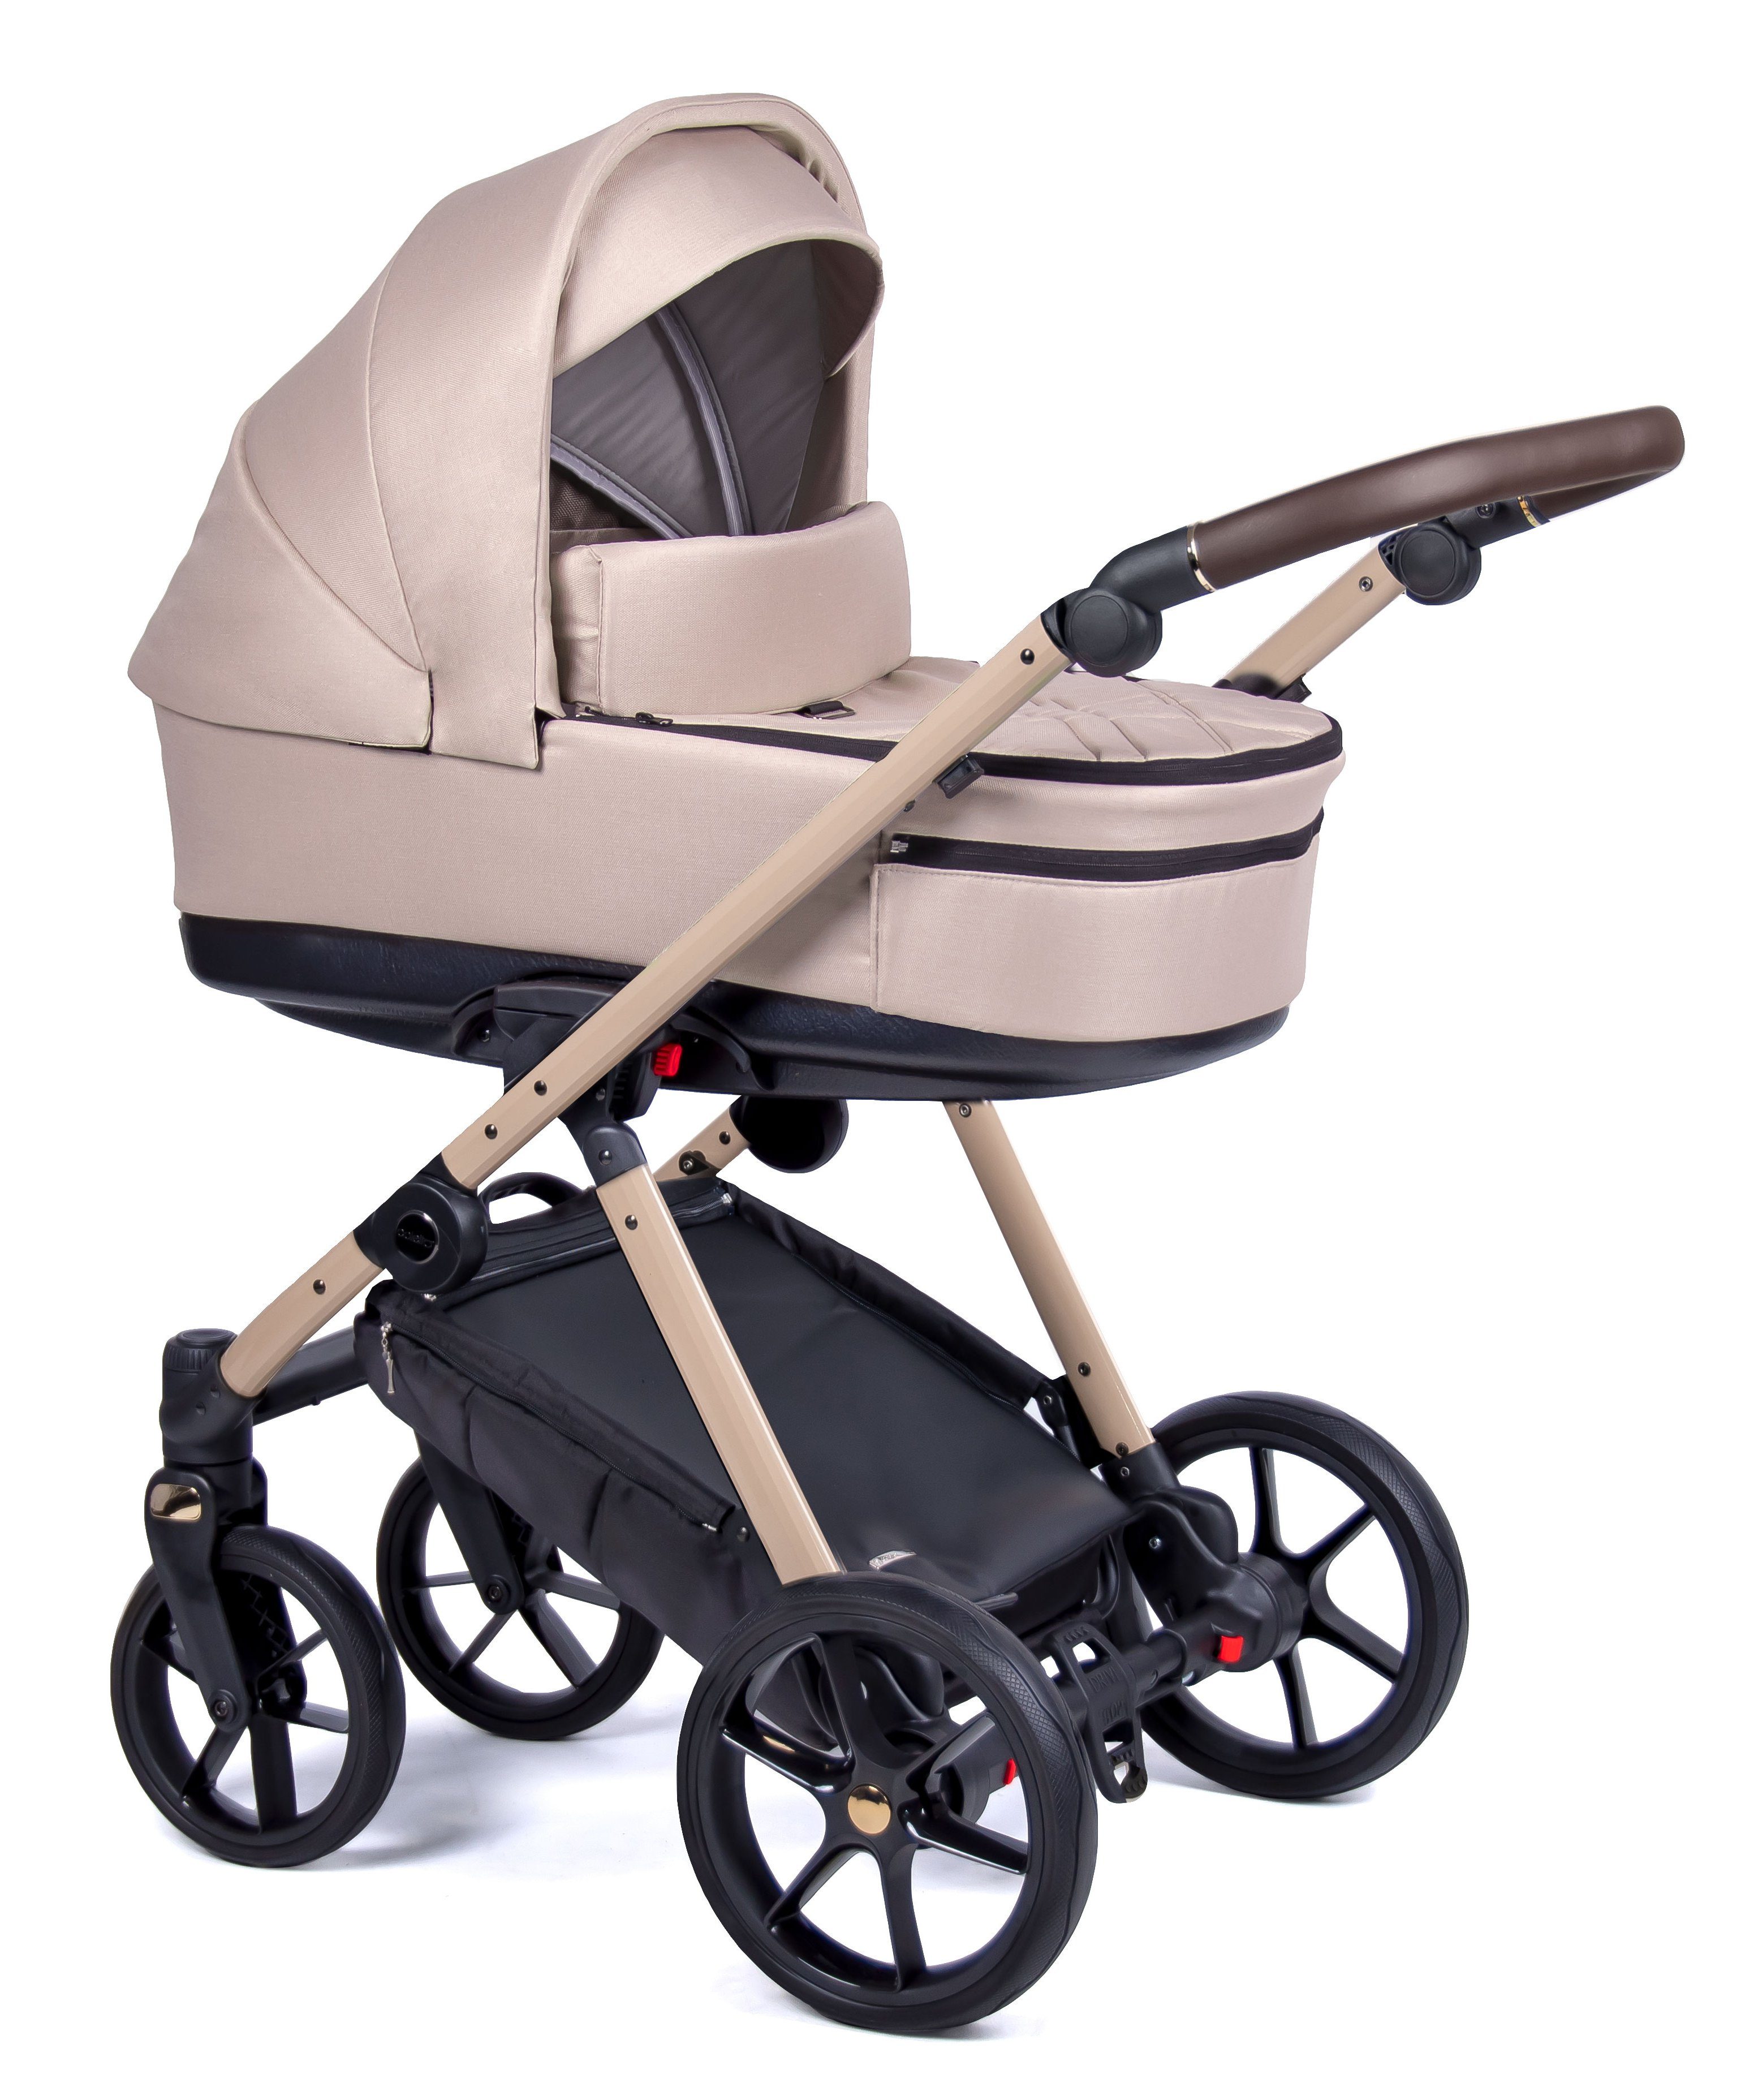 babies-on-wheels Kombi-Kinderwagen 2 in 1 in Designs Teile Kinderwagen-Set beige Sand = 14 Gestell 24 Axxis - 